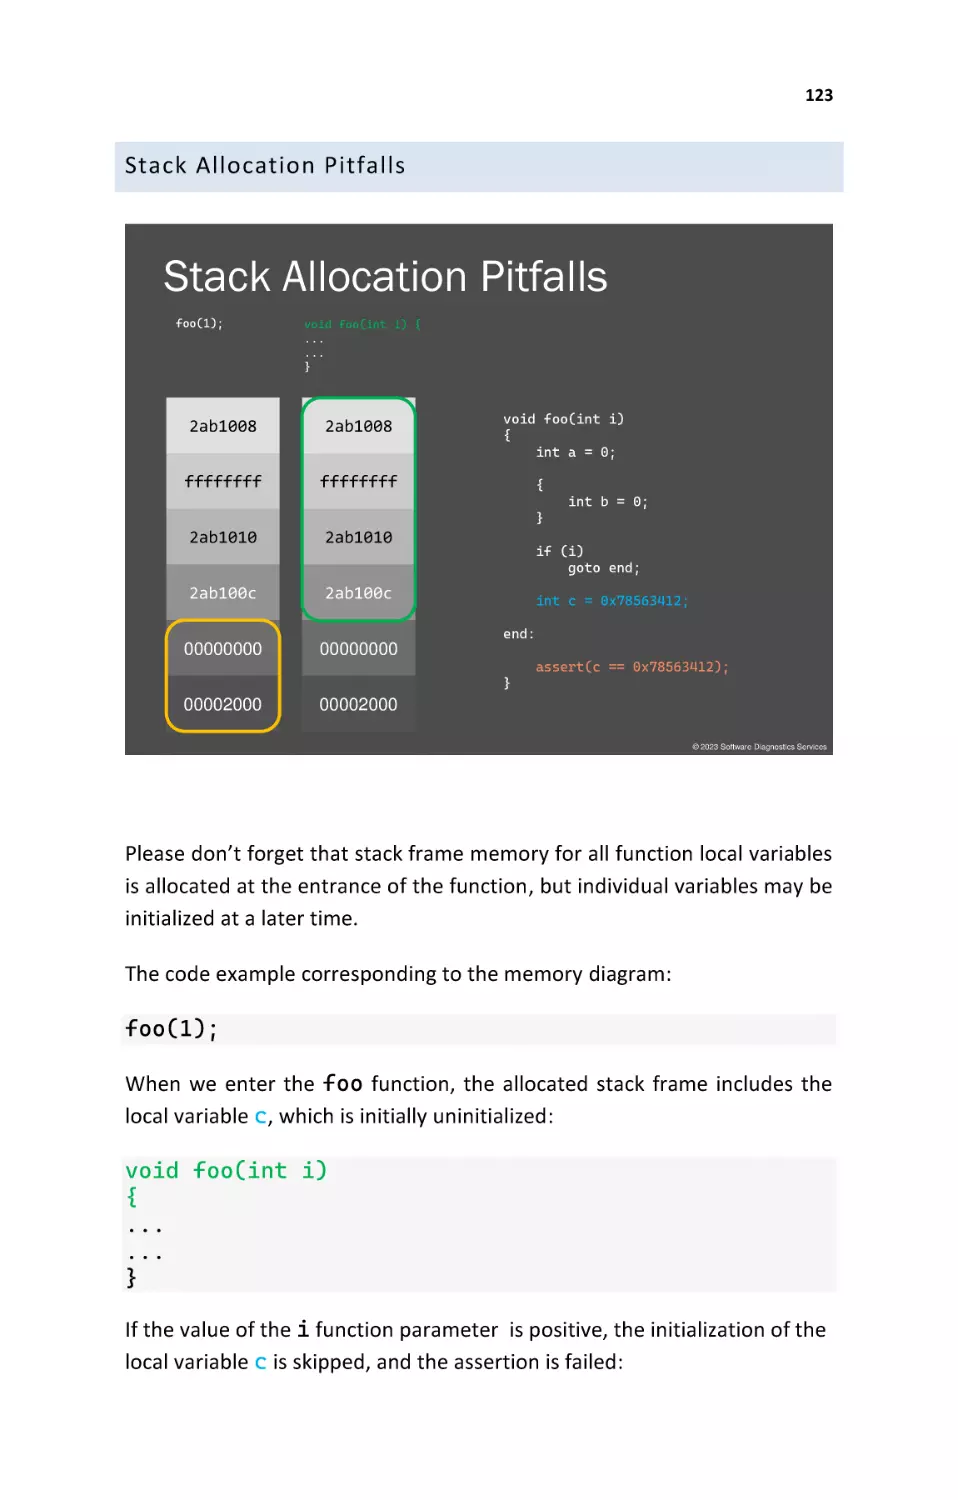 Stack Allocation Pitfalls